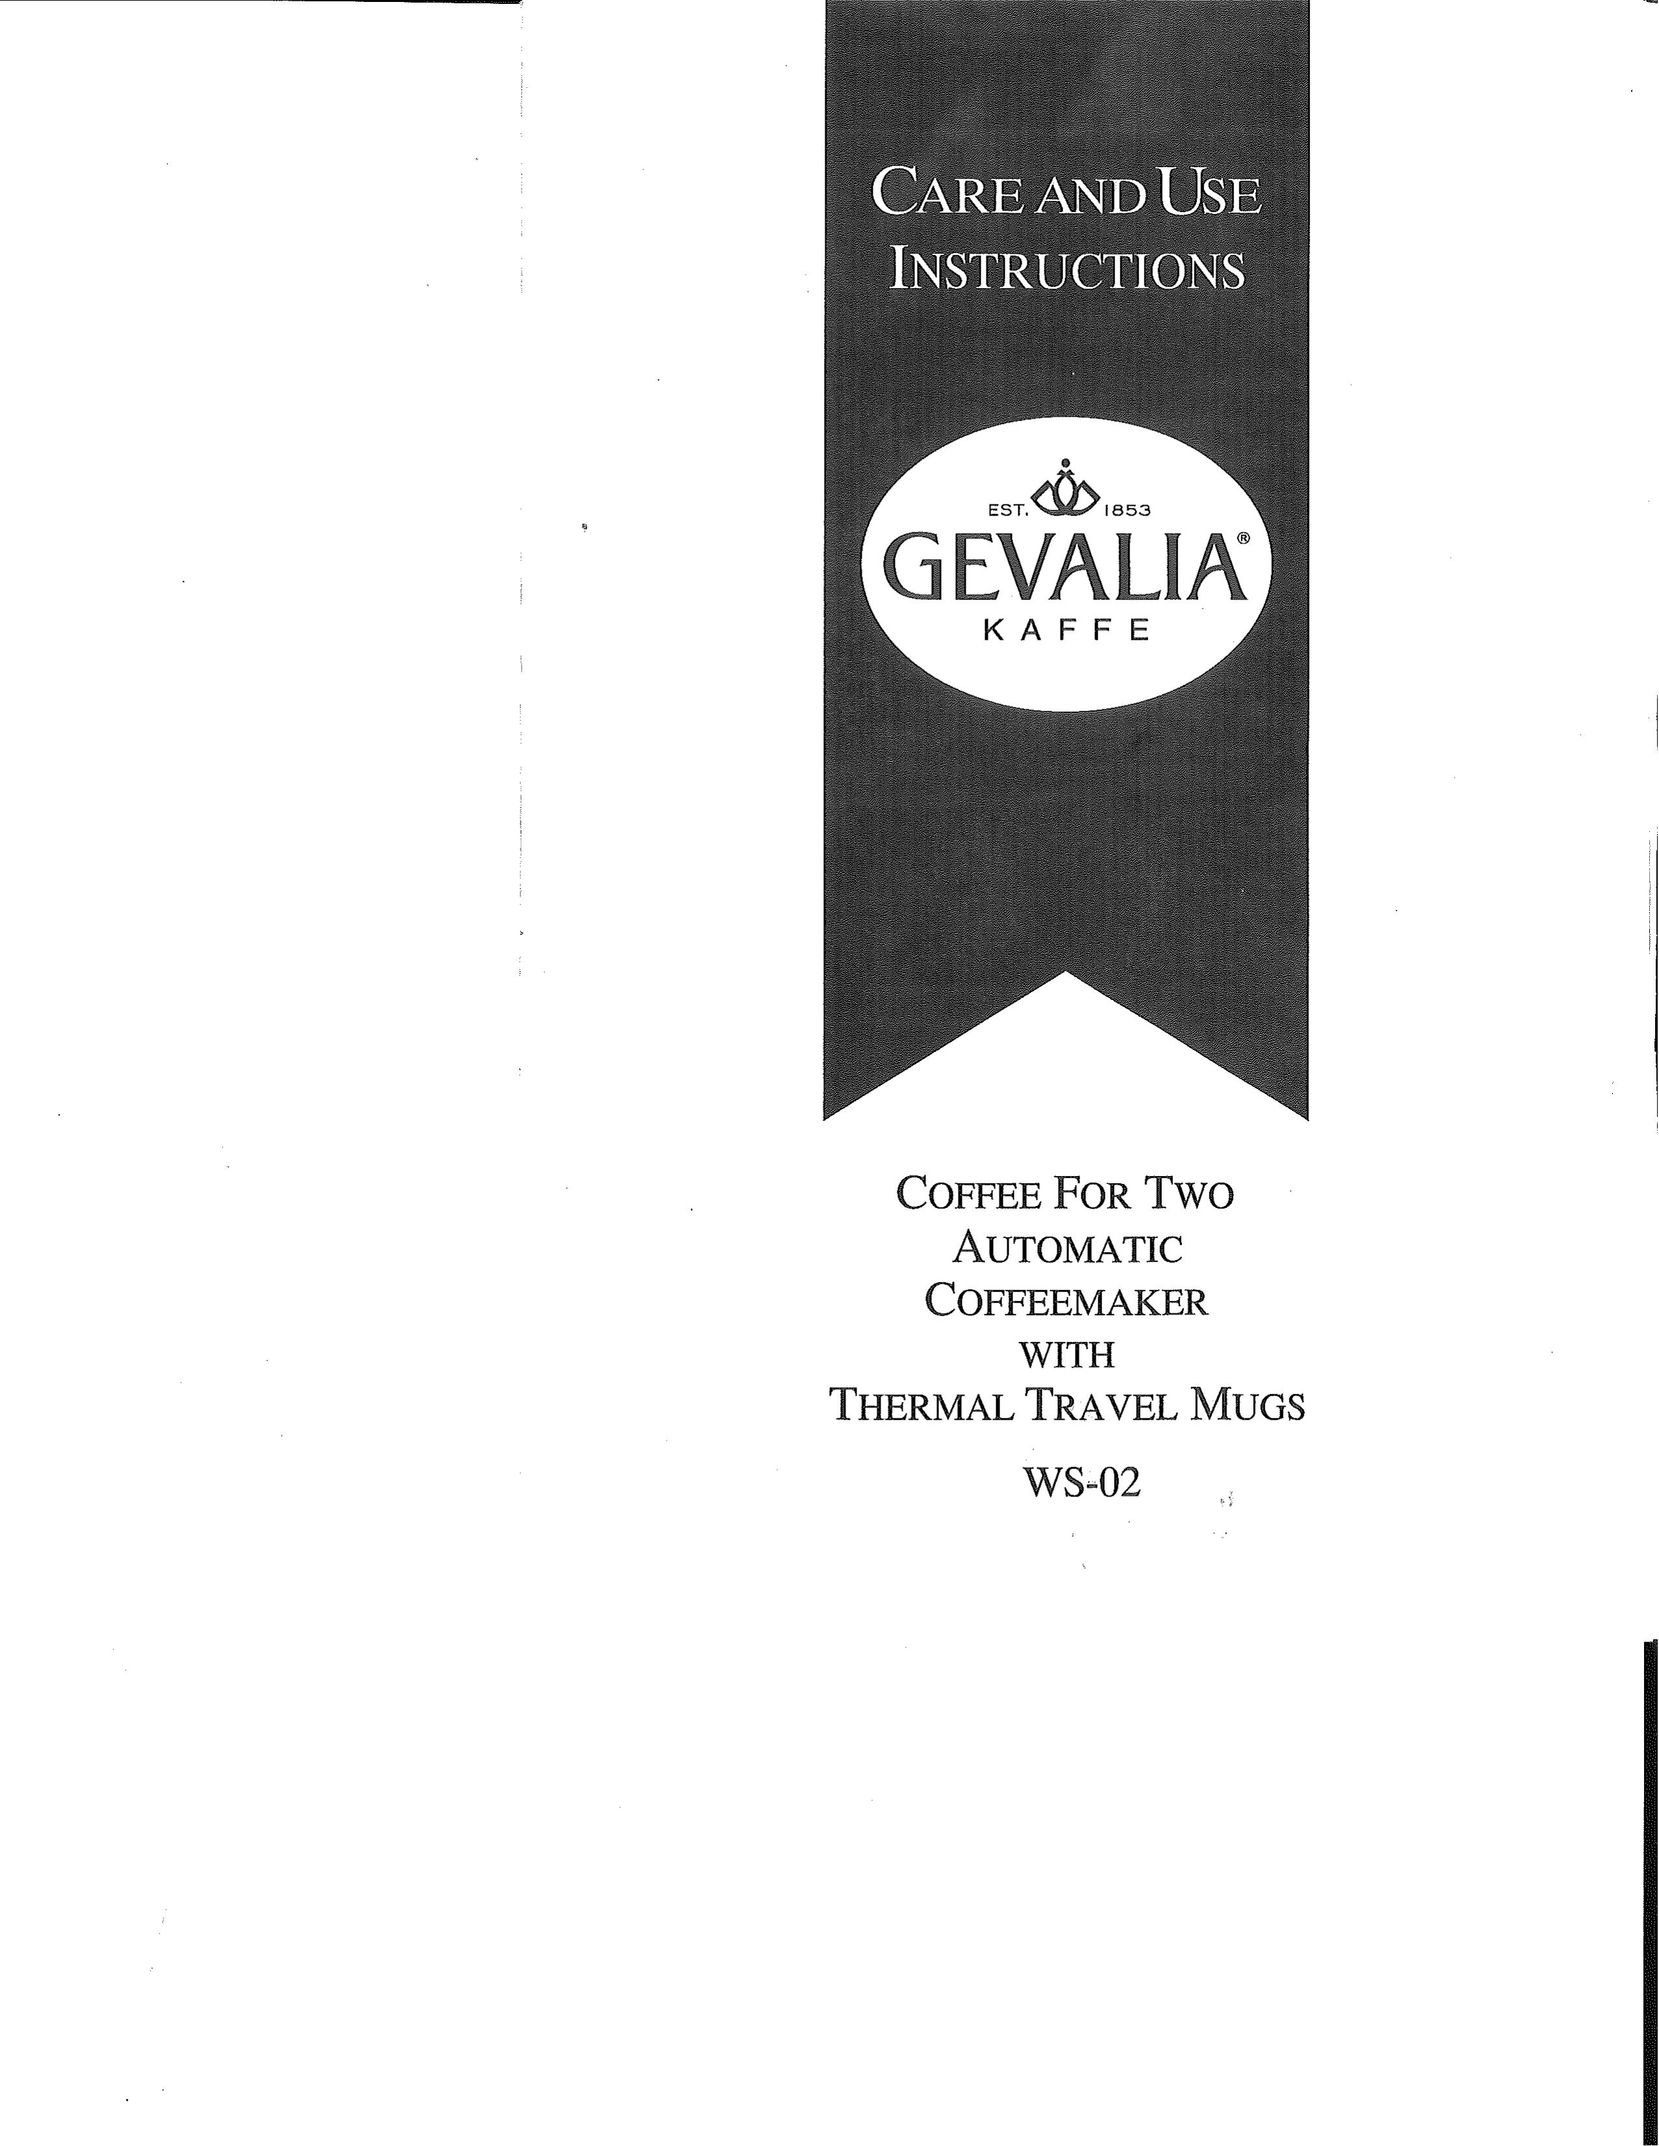 Gevalia WS-02 Coffeemaker User Manual